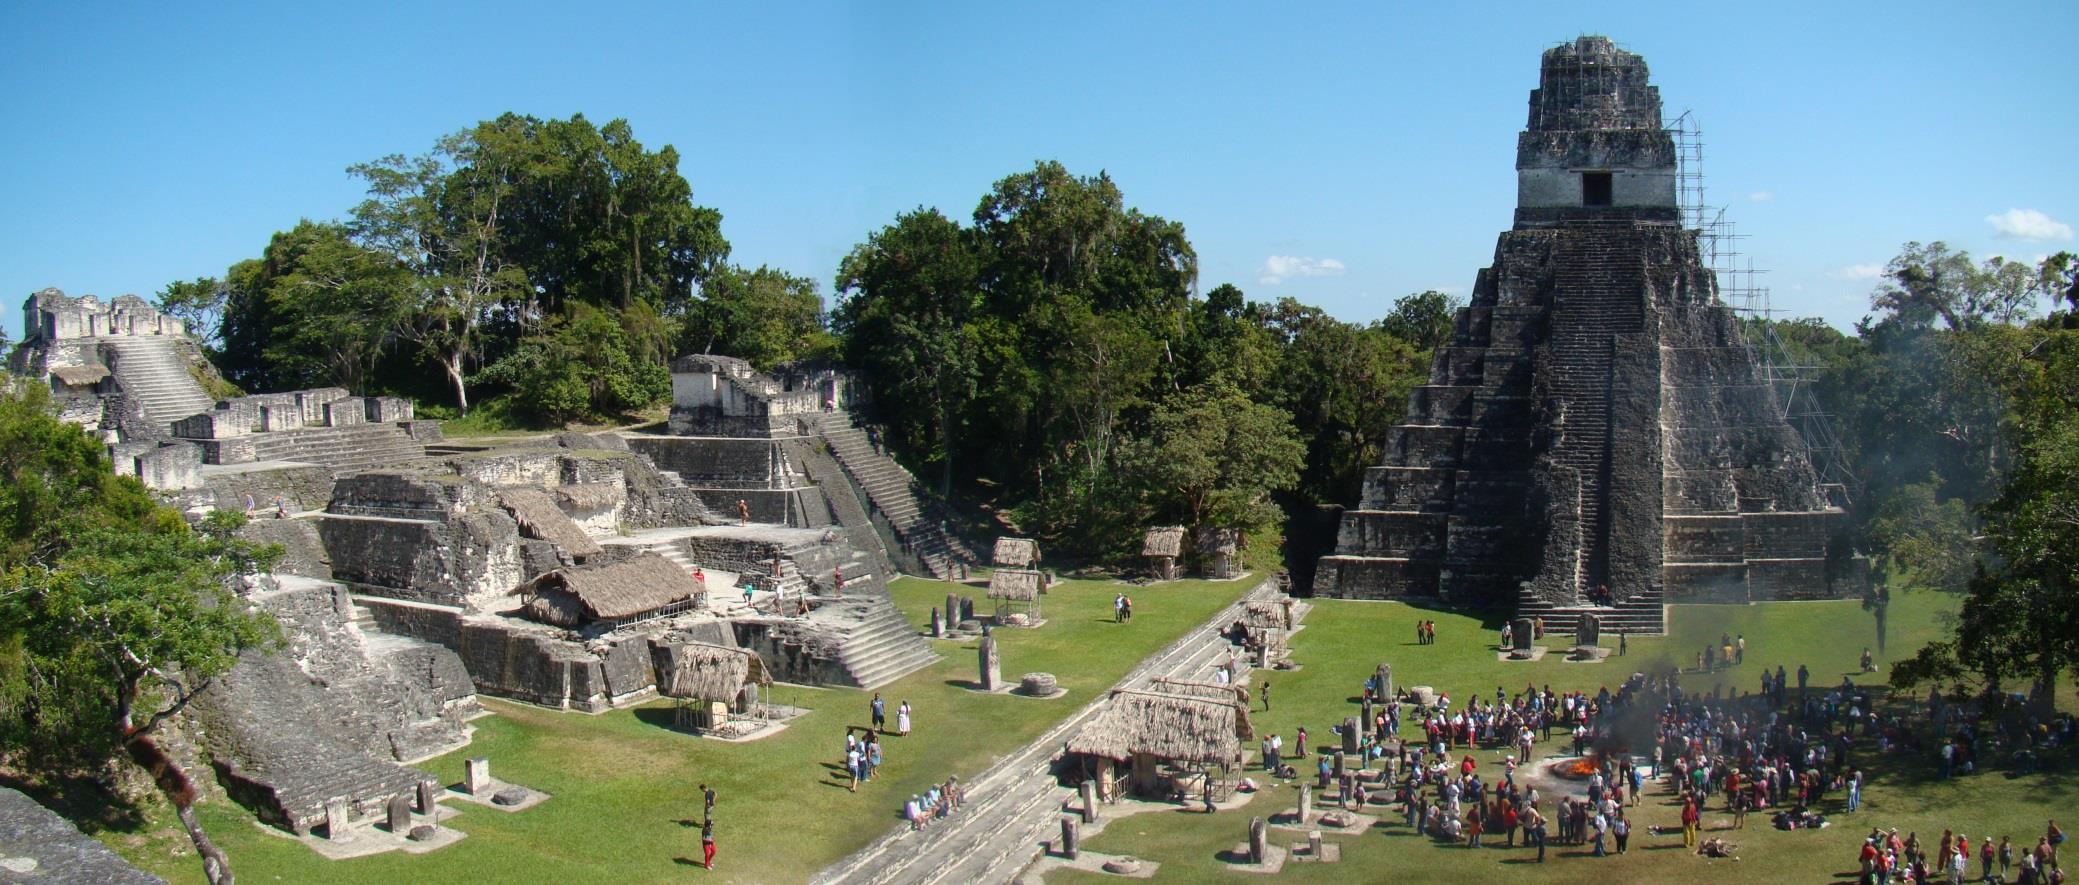 Plaza Tikal - http://upload.wikimedia.